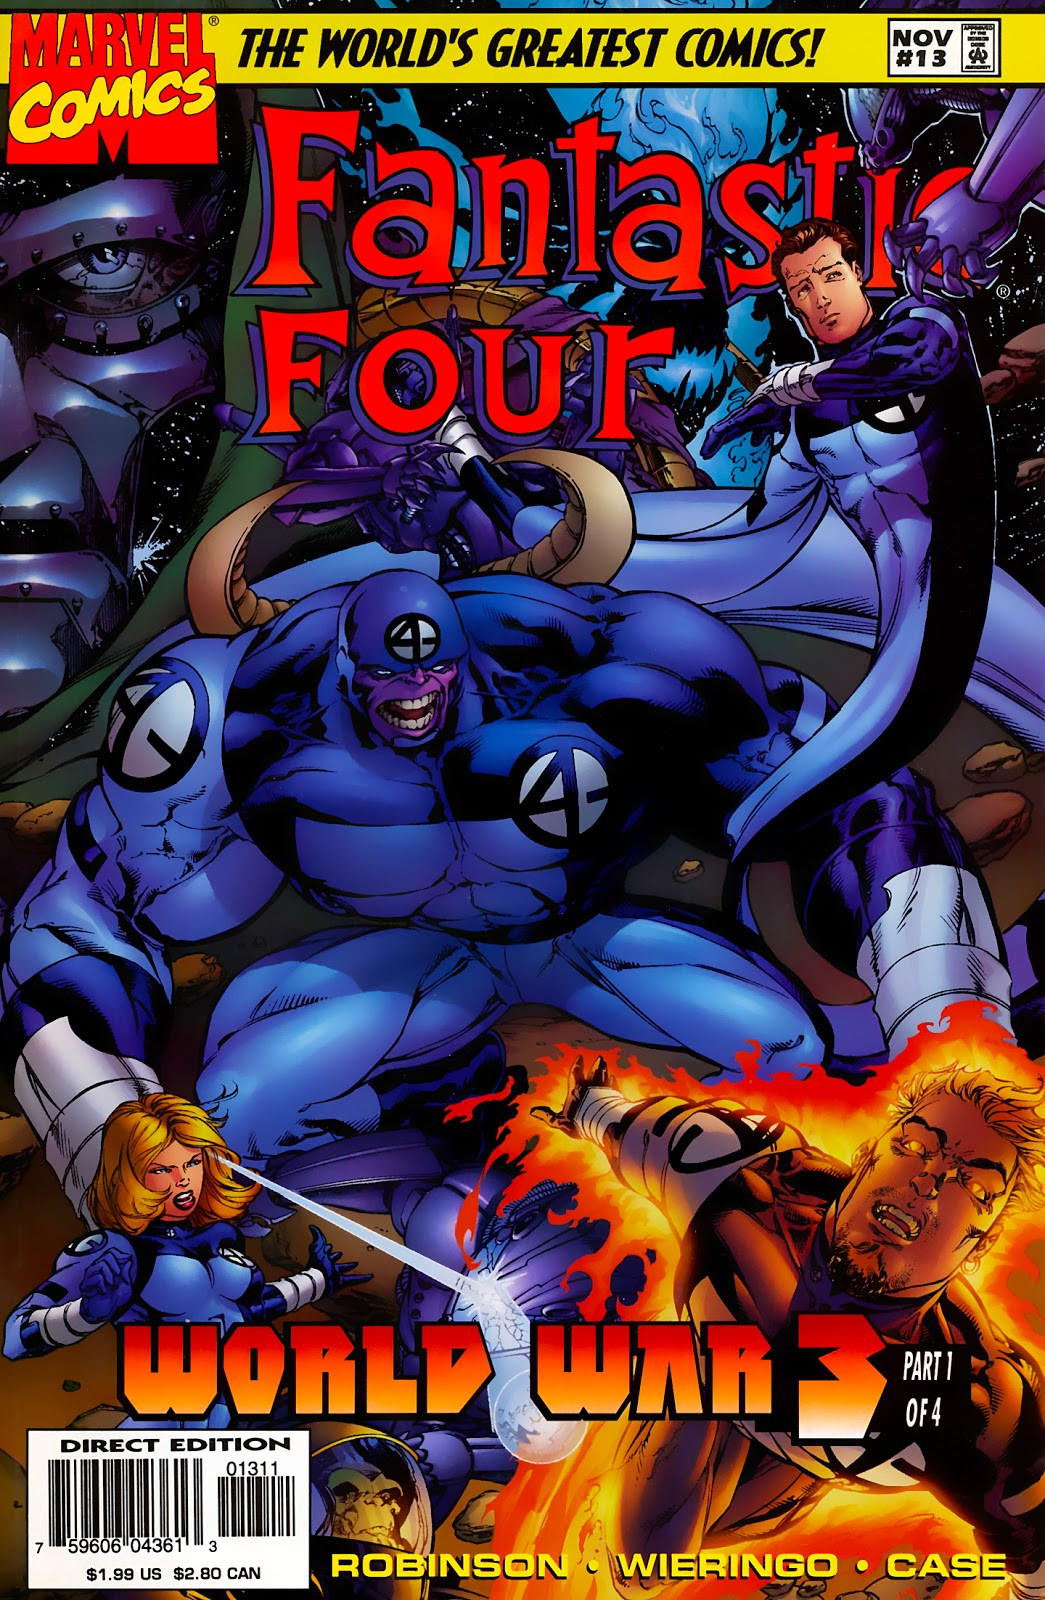 Fantastic Four Vol 2 13 | Marvel Database | Fandom